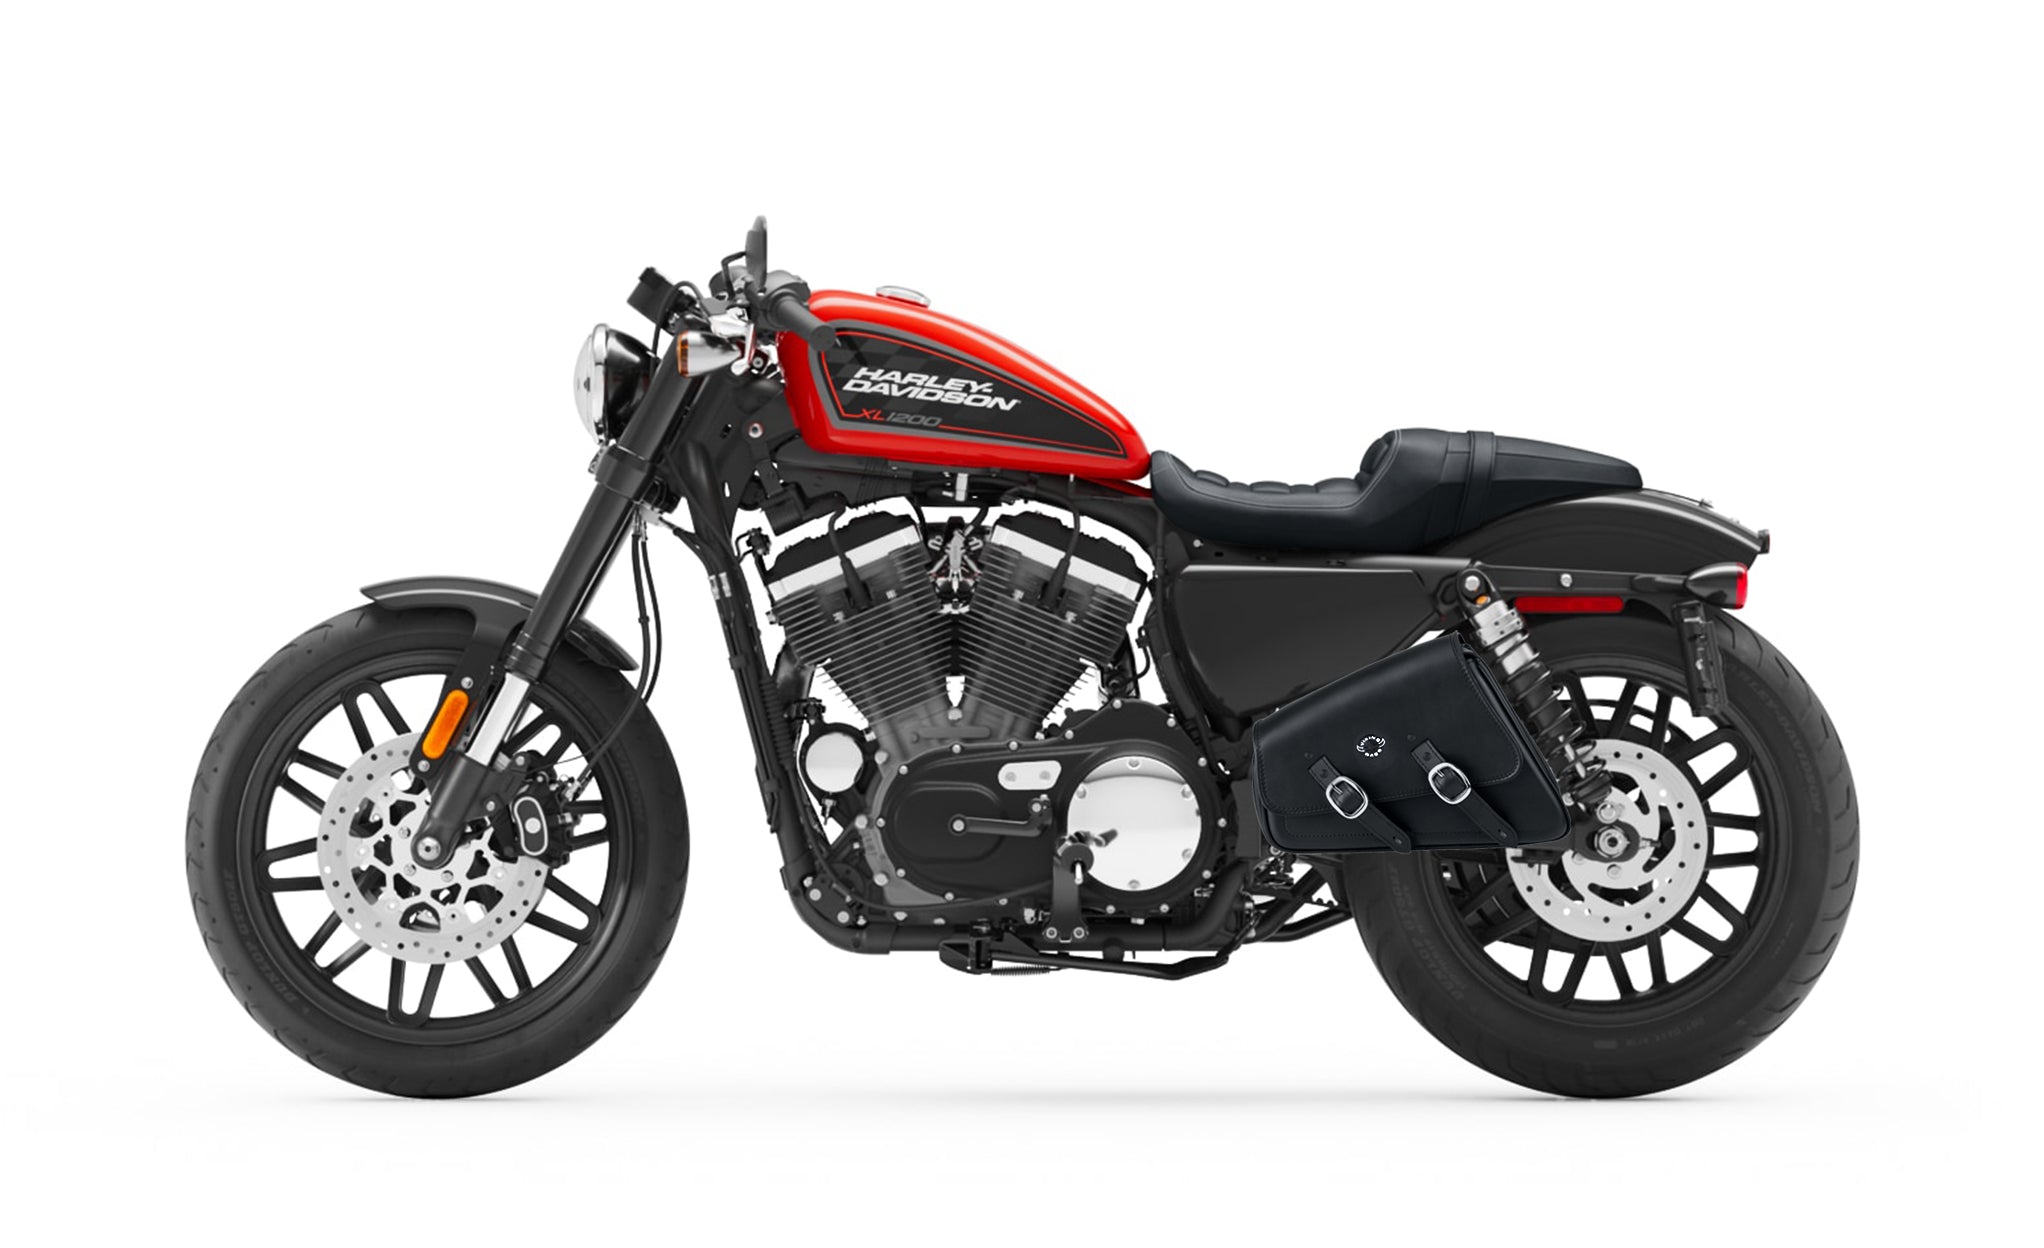 Viking Bullet Motorcycle Swing Arm Bag for Harley Davidson Sportster Bag on Bike View @expand